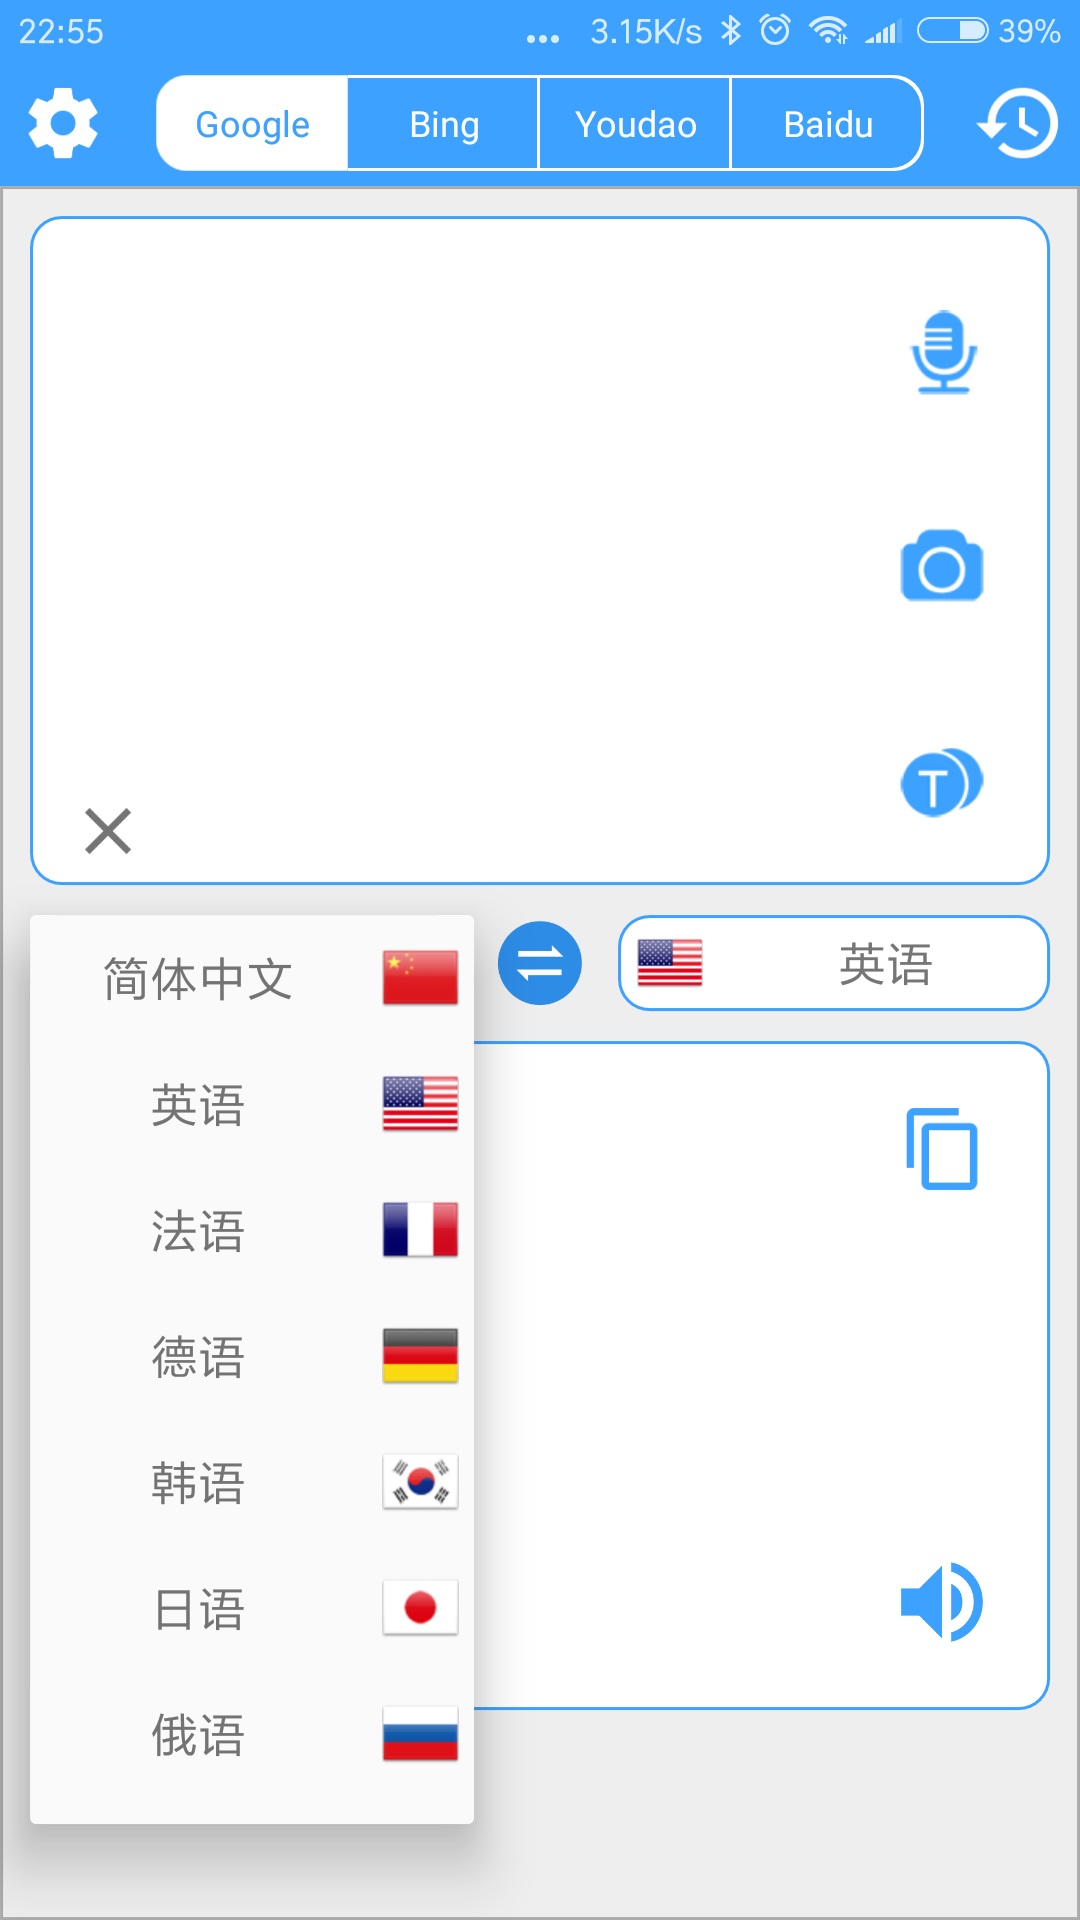 google翻译在线app下载-谷歌翻译下载安装-谷歌翻译器最新安卓ios版v6.15.0.01.347678229(暂未上线)-中国快三